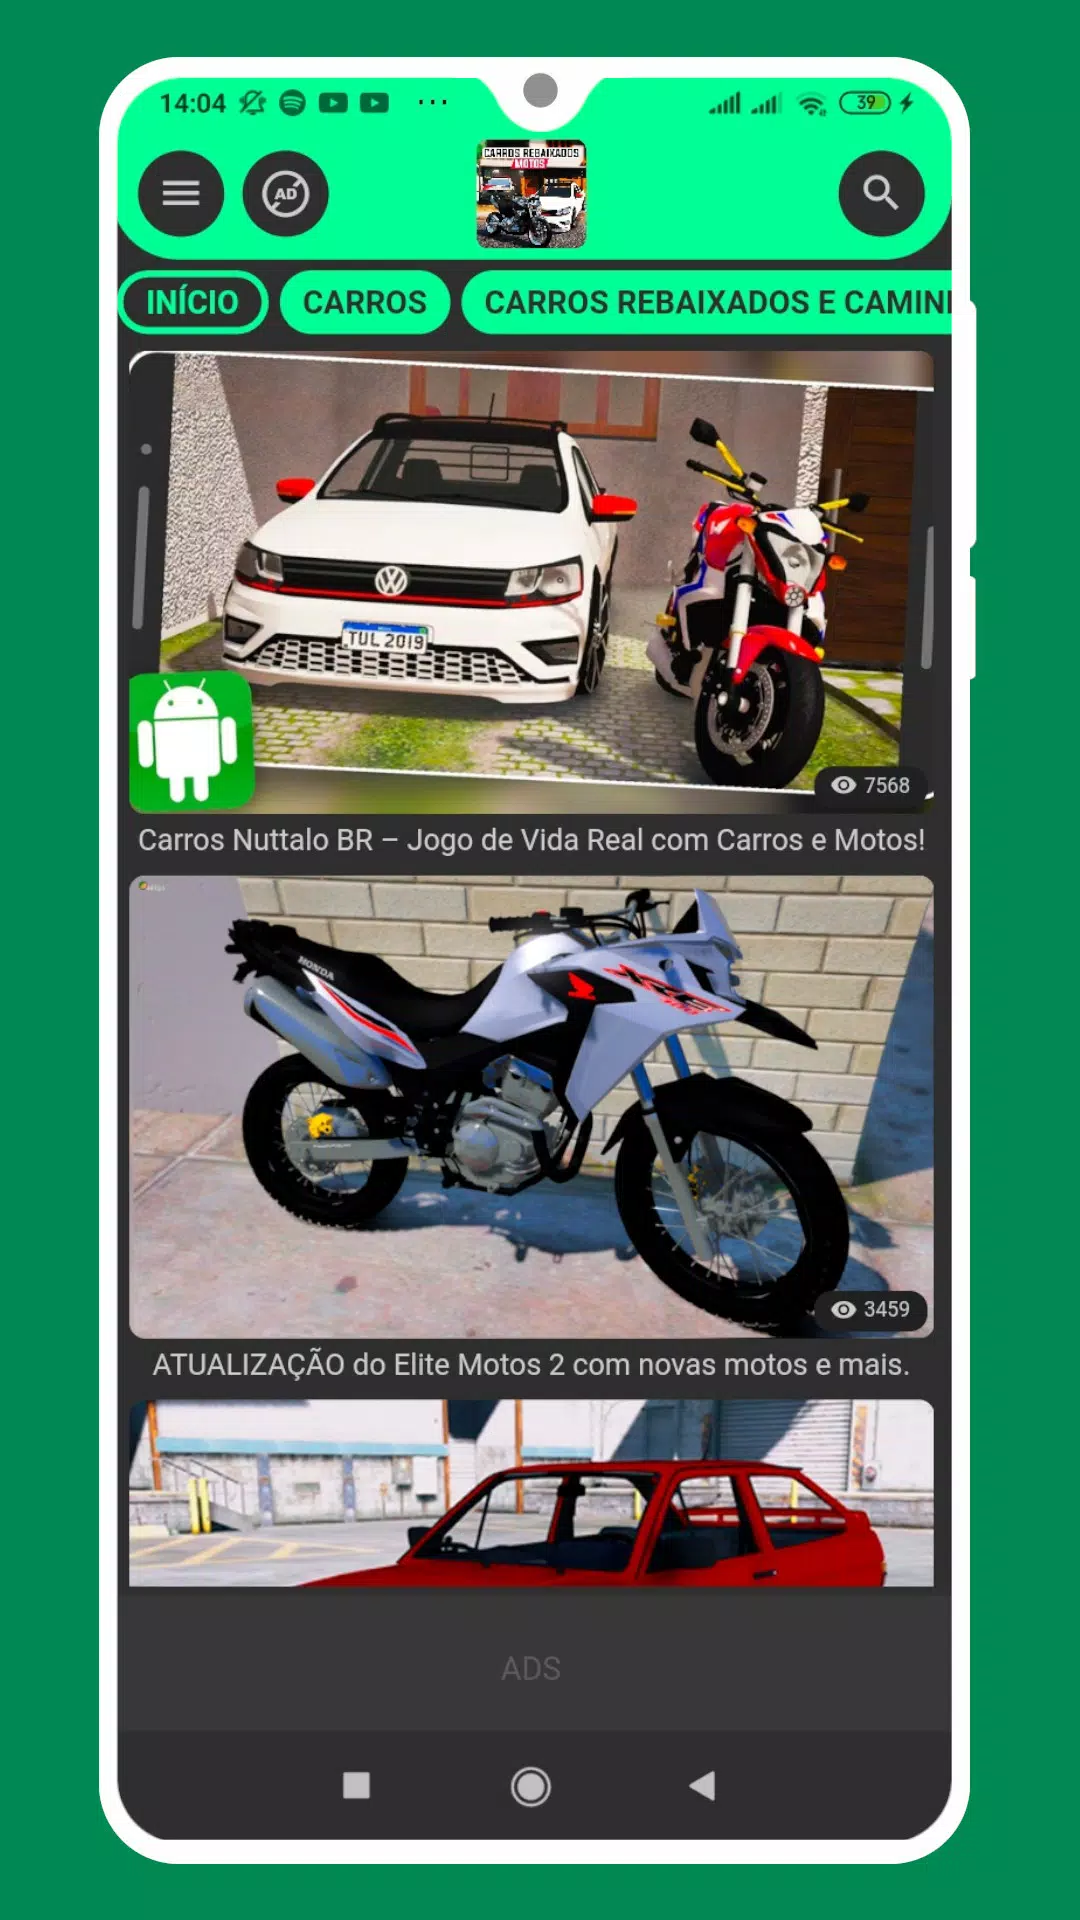 Carros Rebaixados e Motos for Android - Free App Download